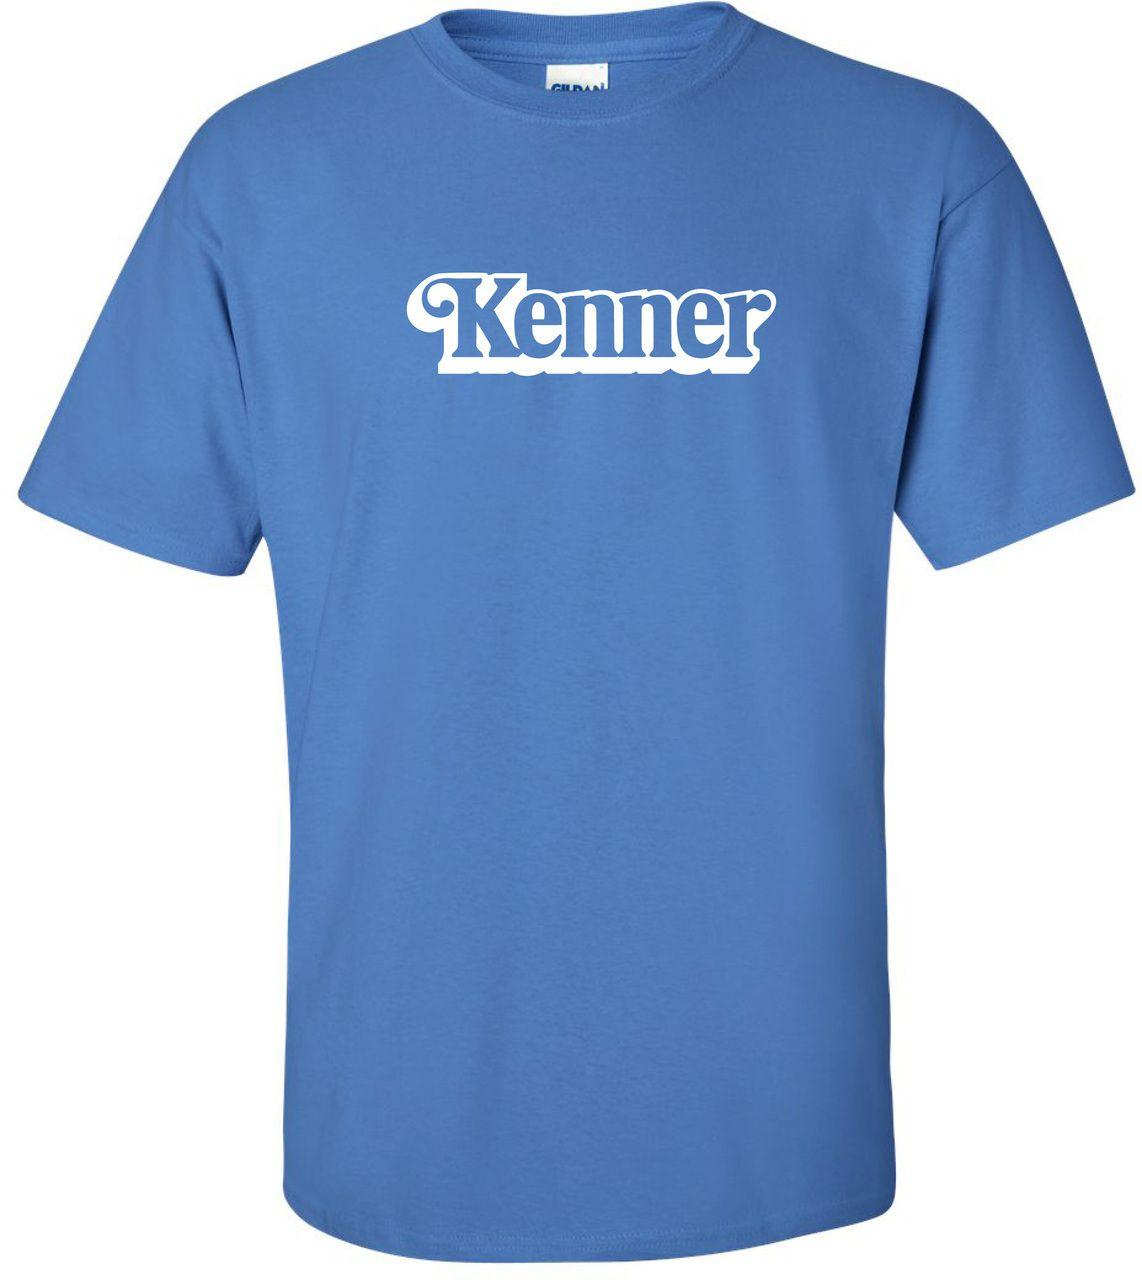 Kenner Logo - Kenner Logo 80s Toy Vintage Cool T-Shirt - Interspace180